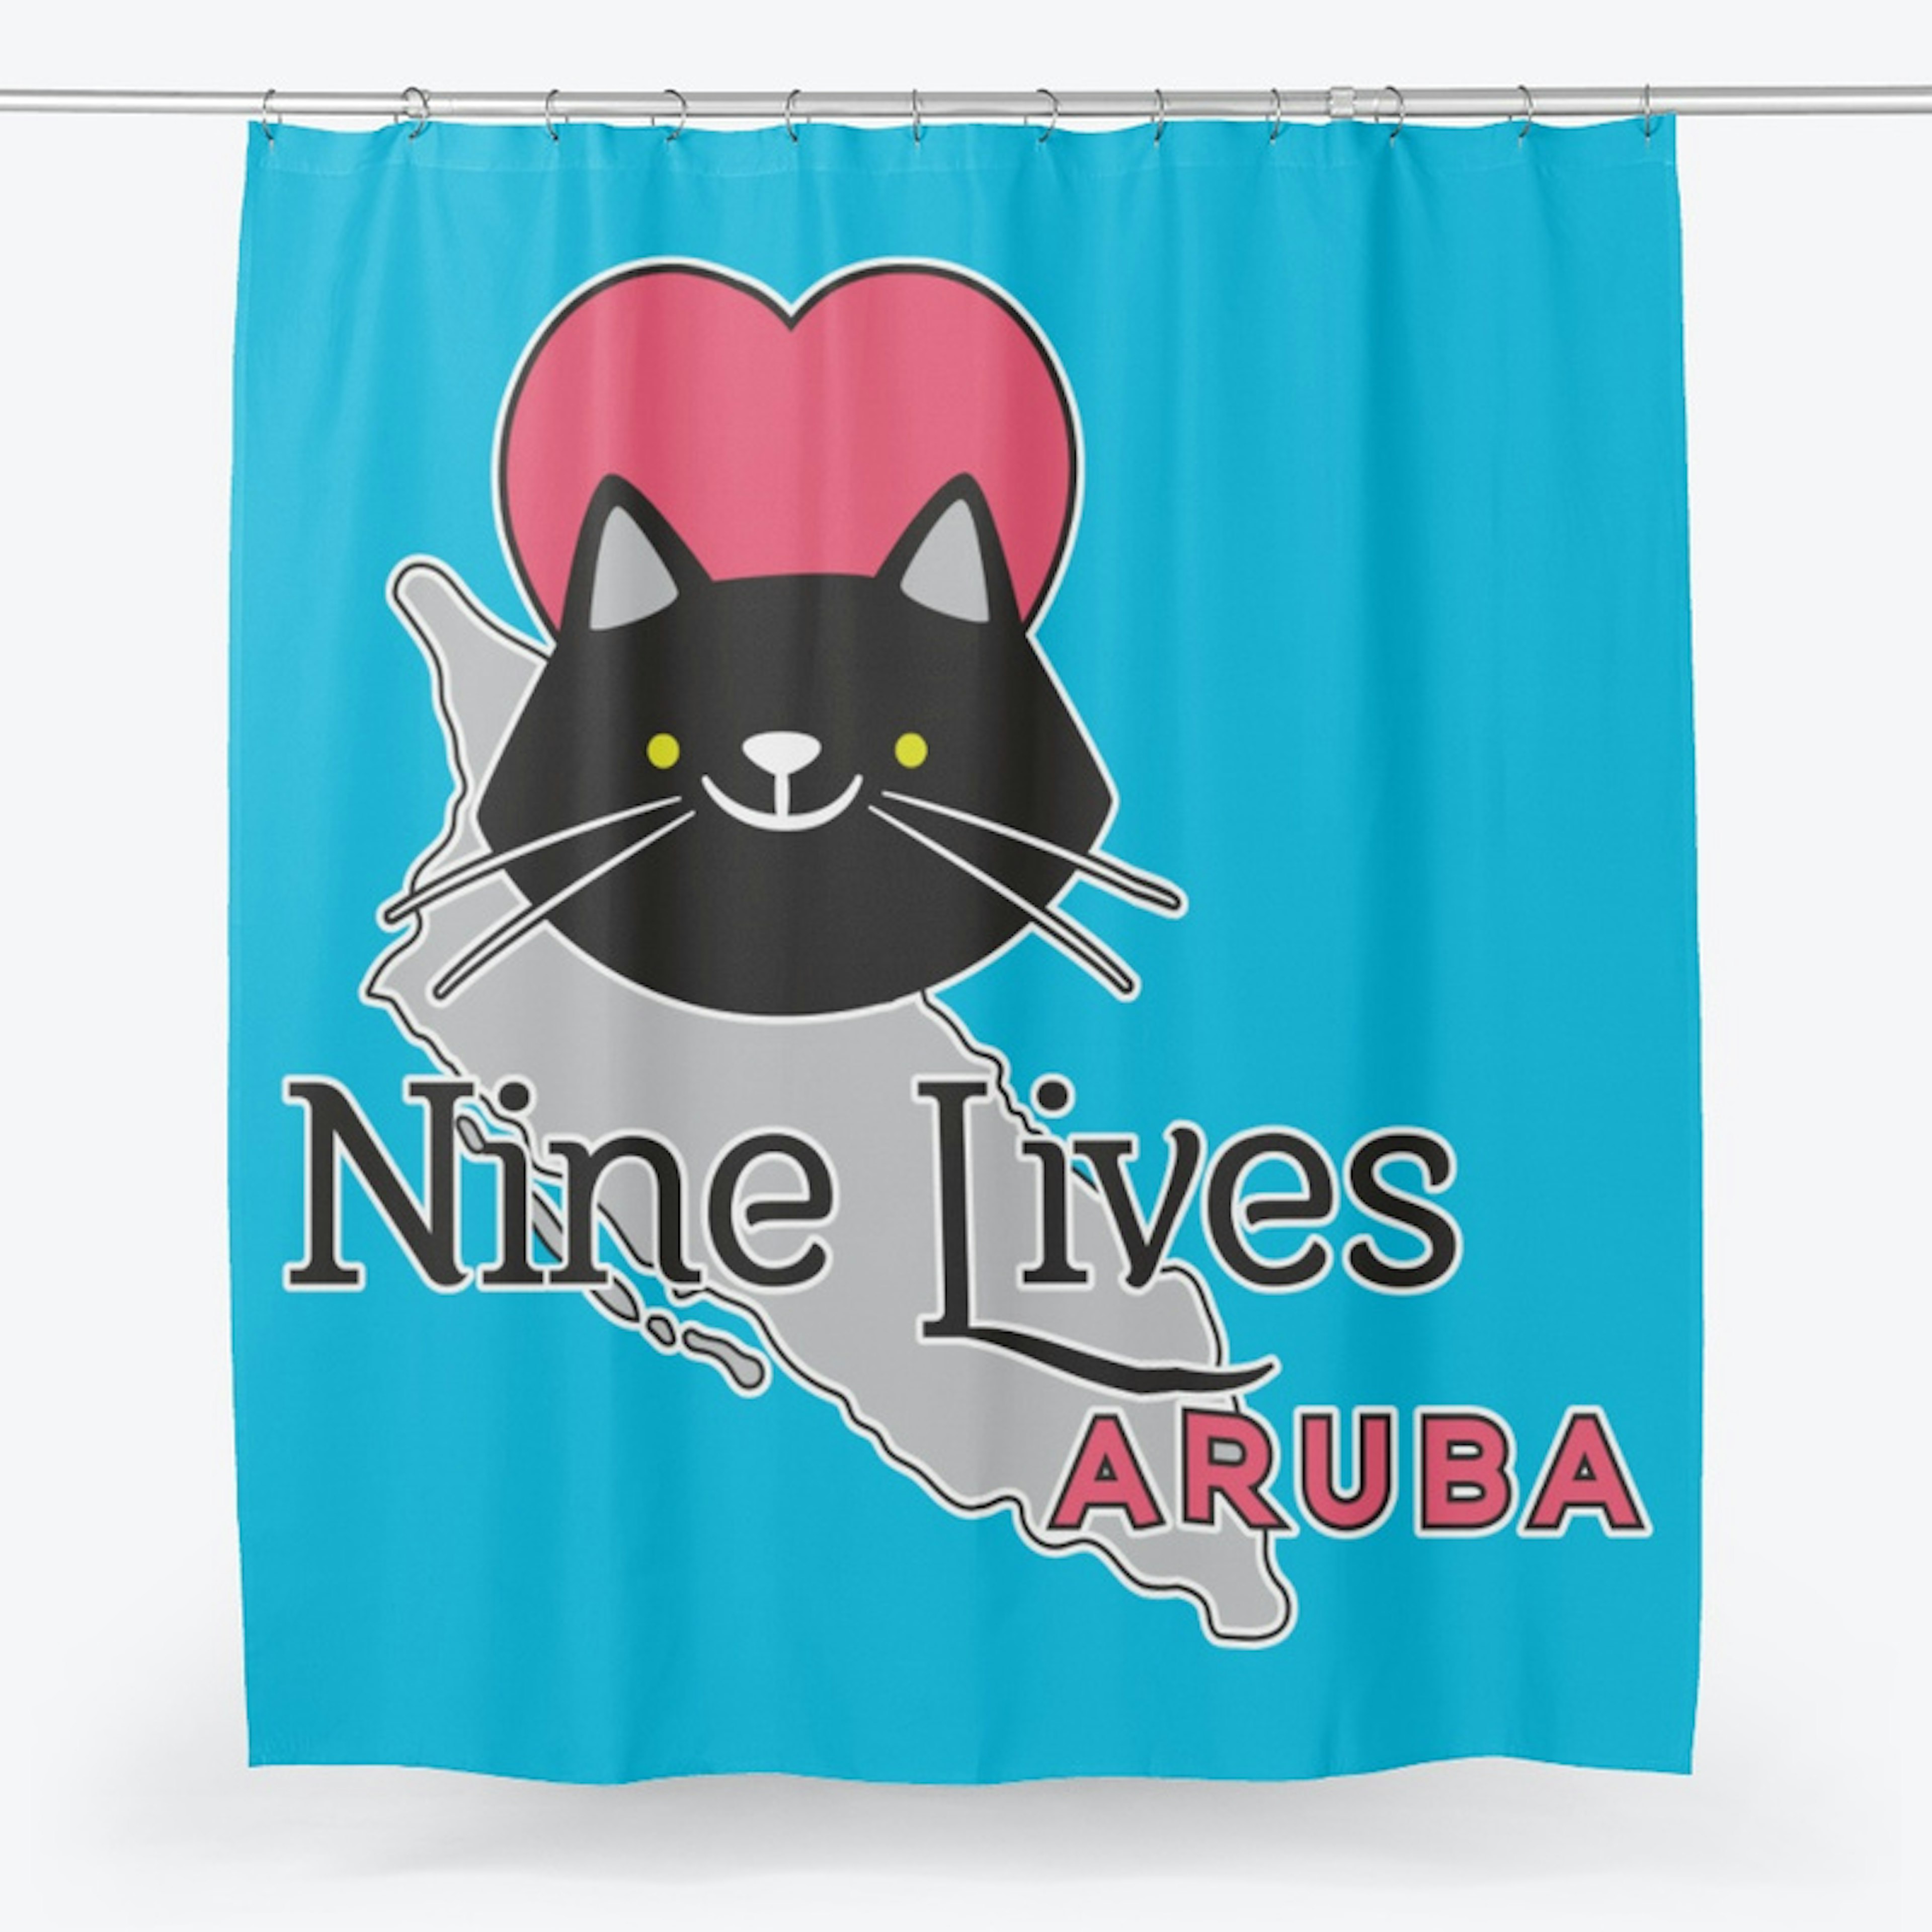 Nine Lives aruba